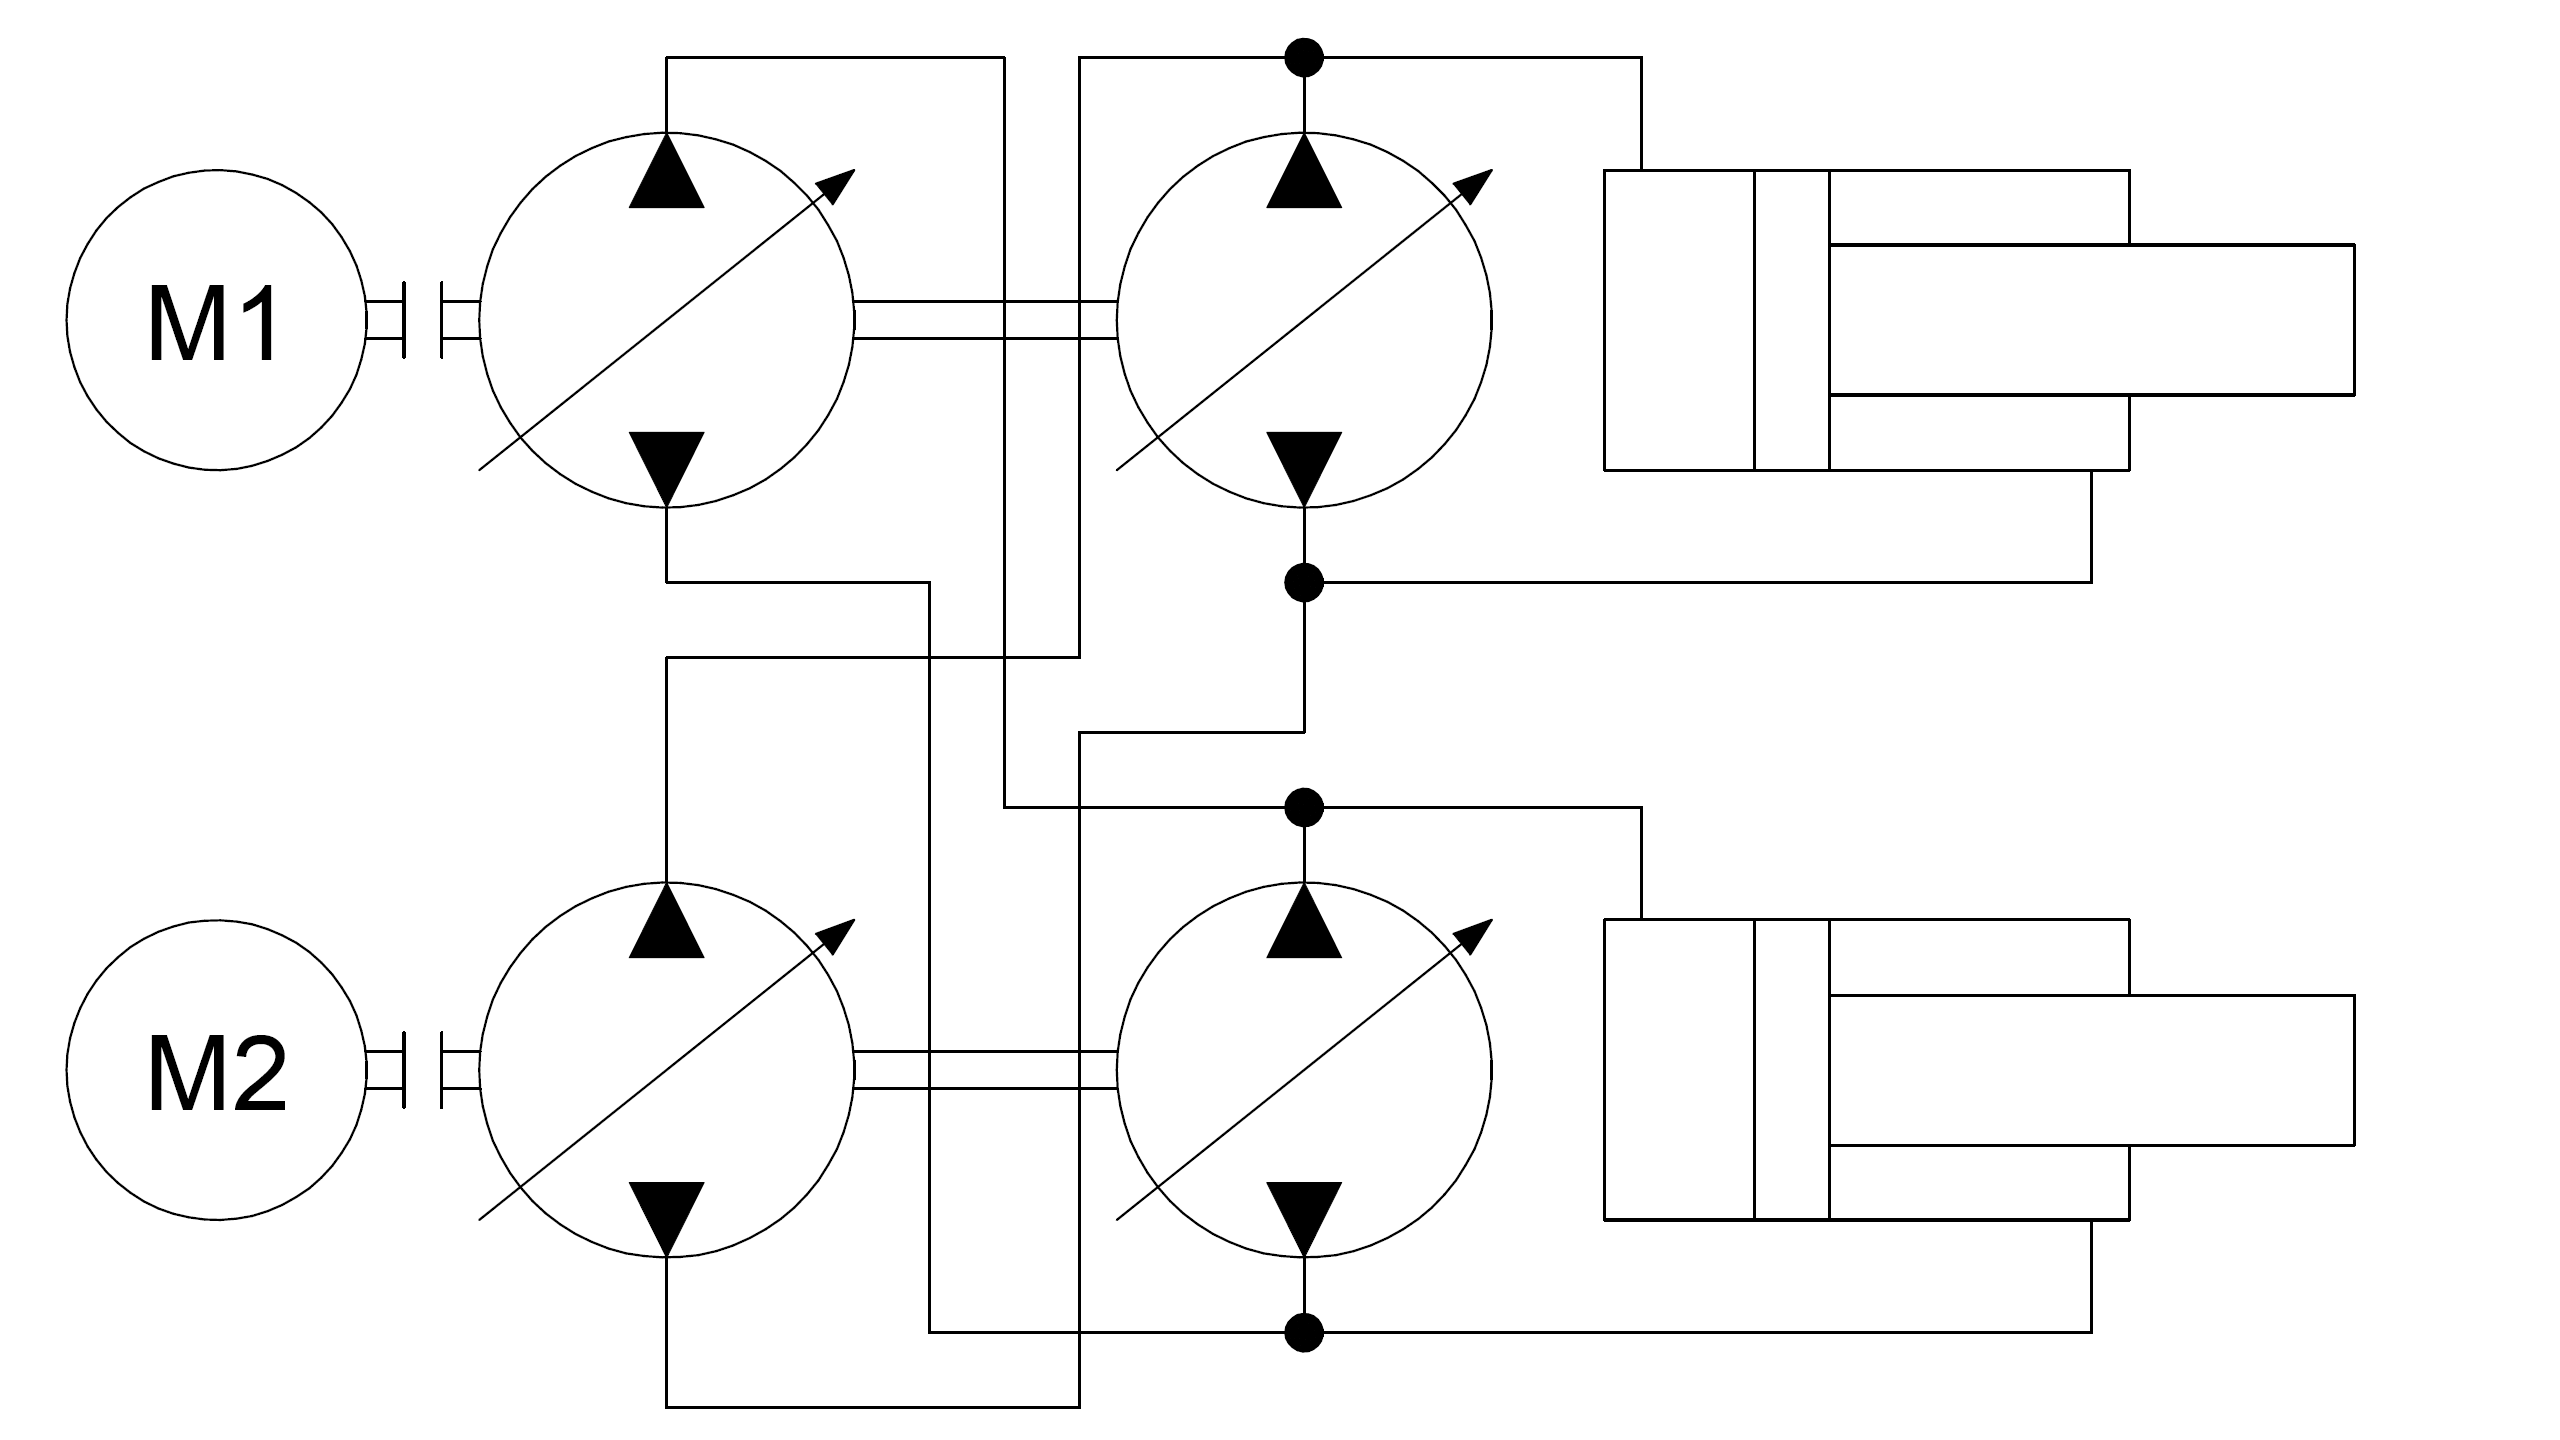 Simplified hydraulic schematic